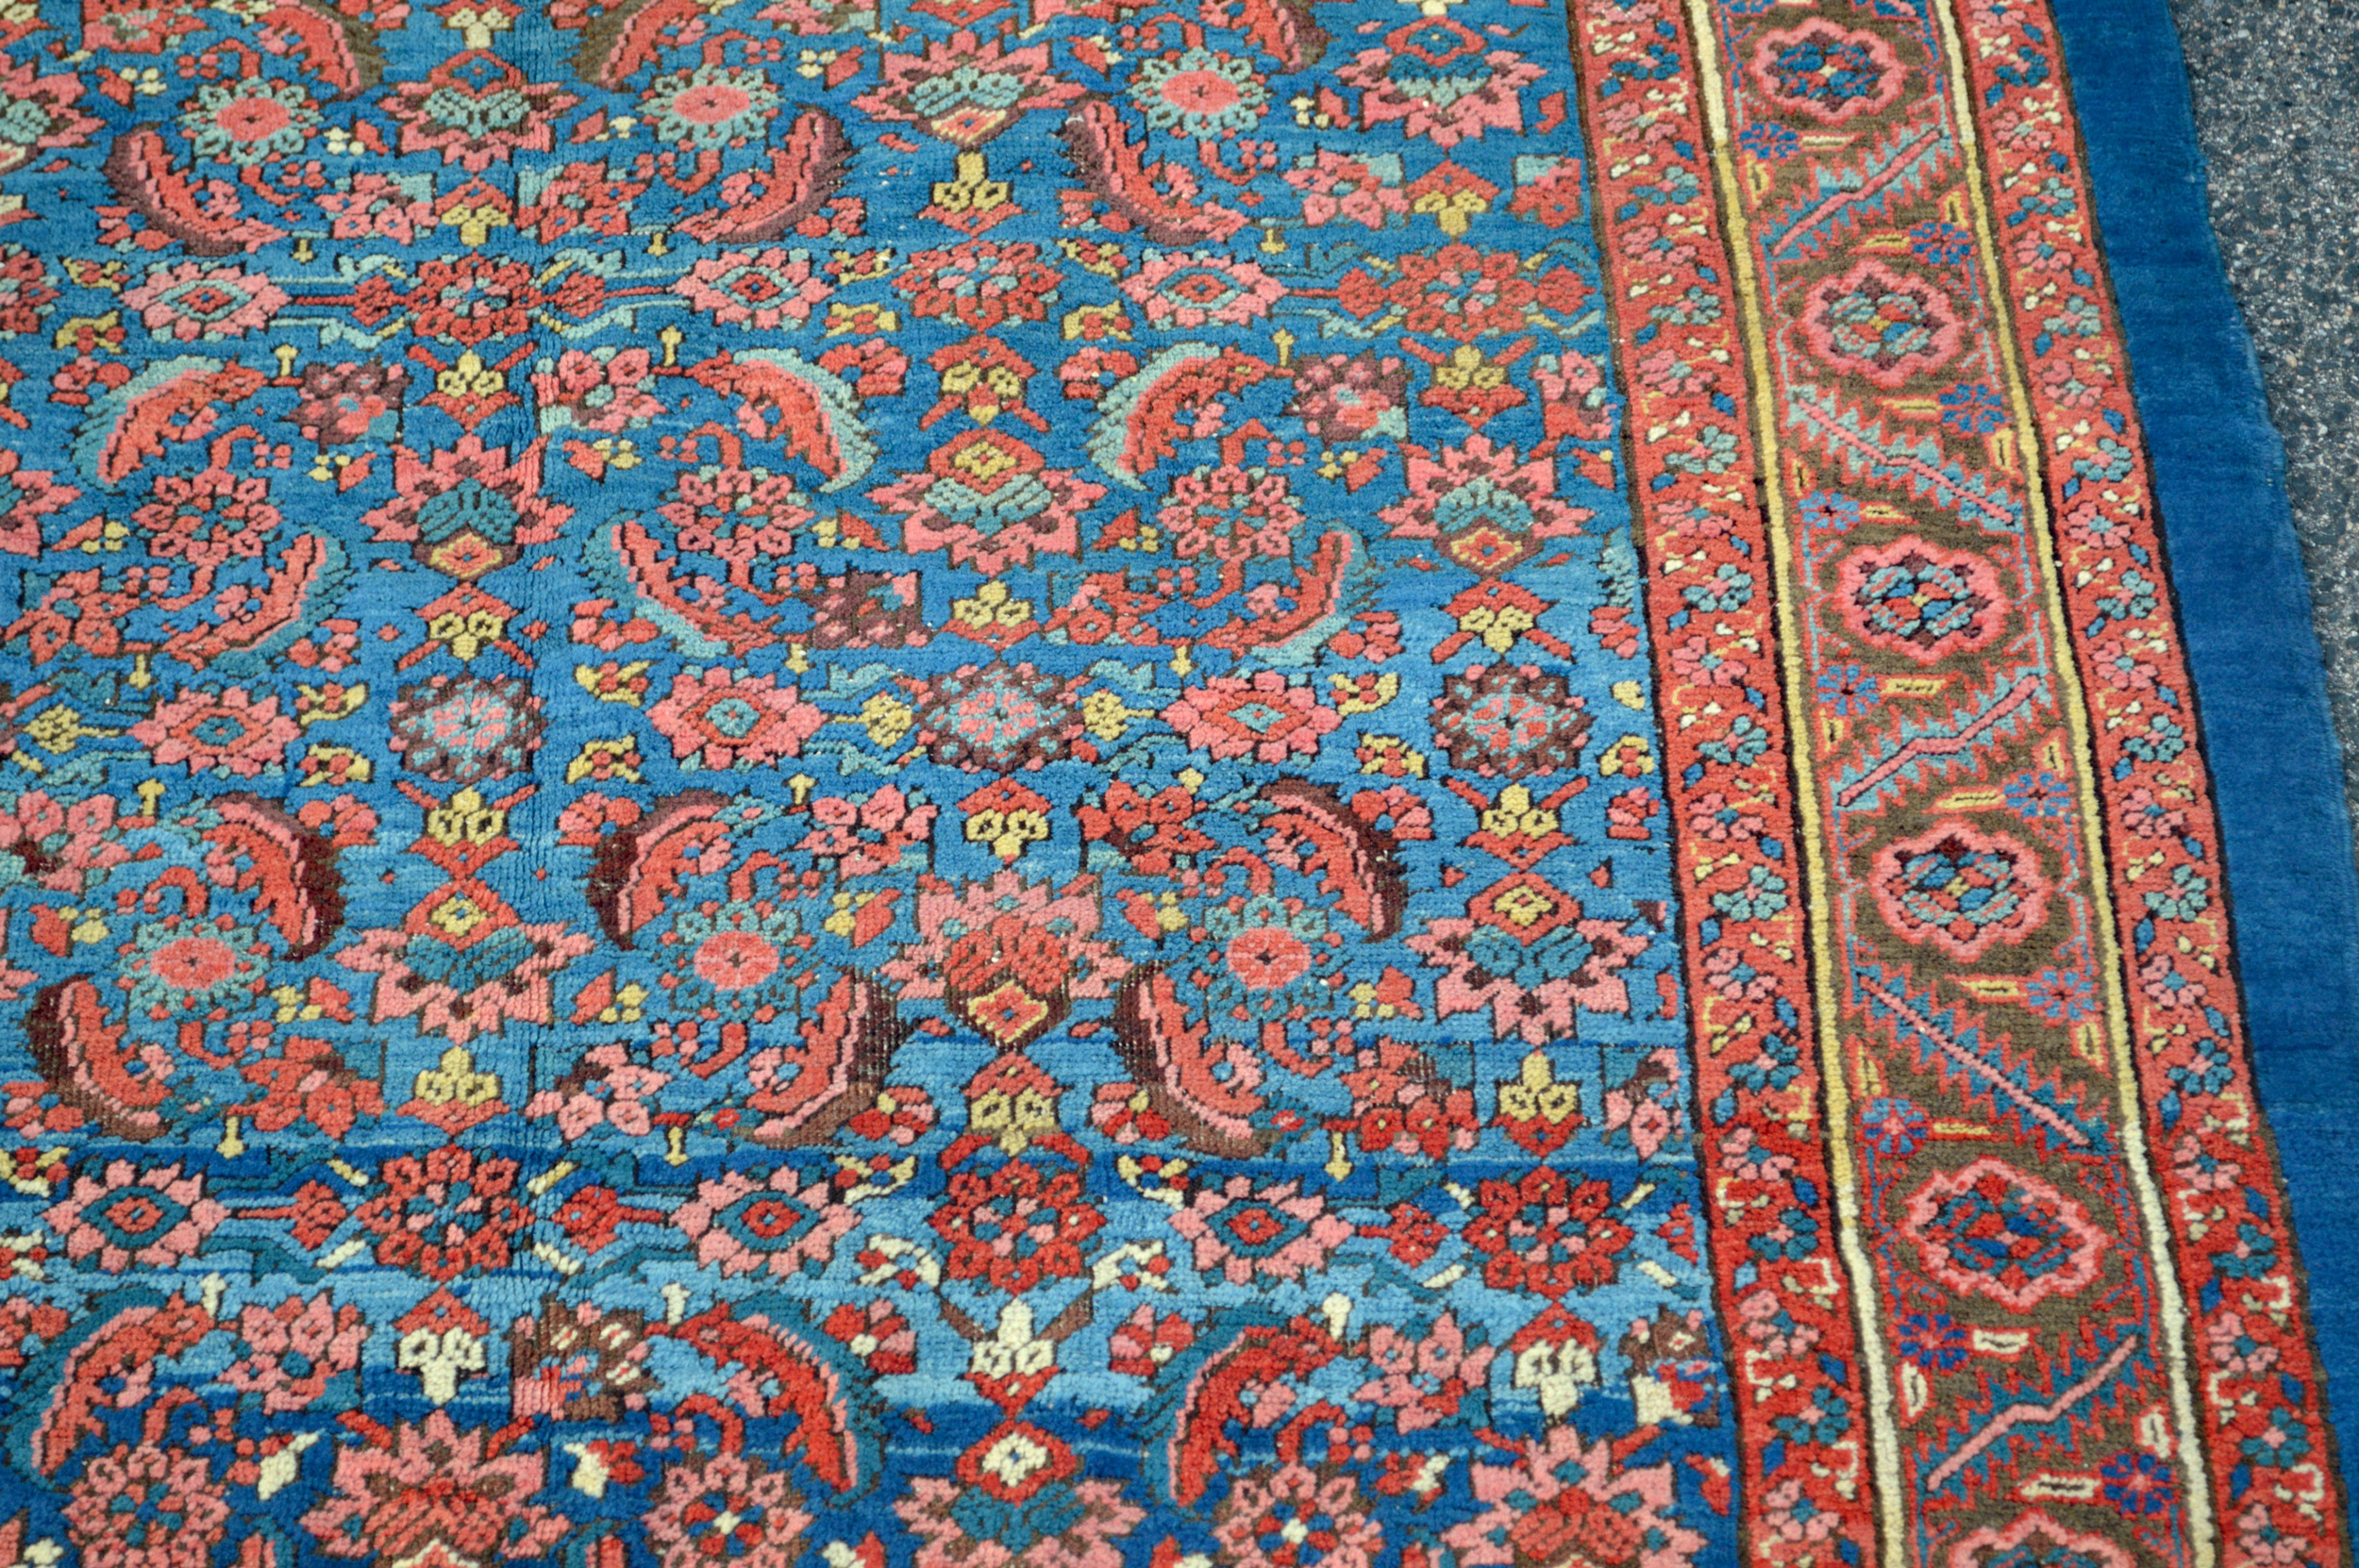 Detail of the Herati design field in an antique northwest Persian Bakshaish carpet - Douglas Stock Gallery, antique Oriental rugs, Persian carpets Boston,MA area